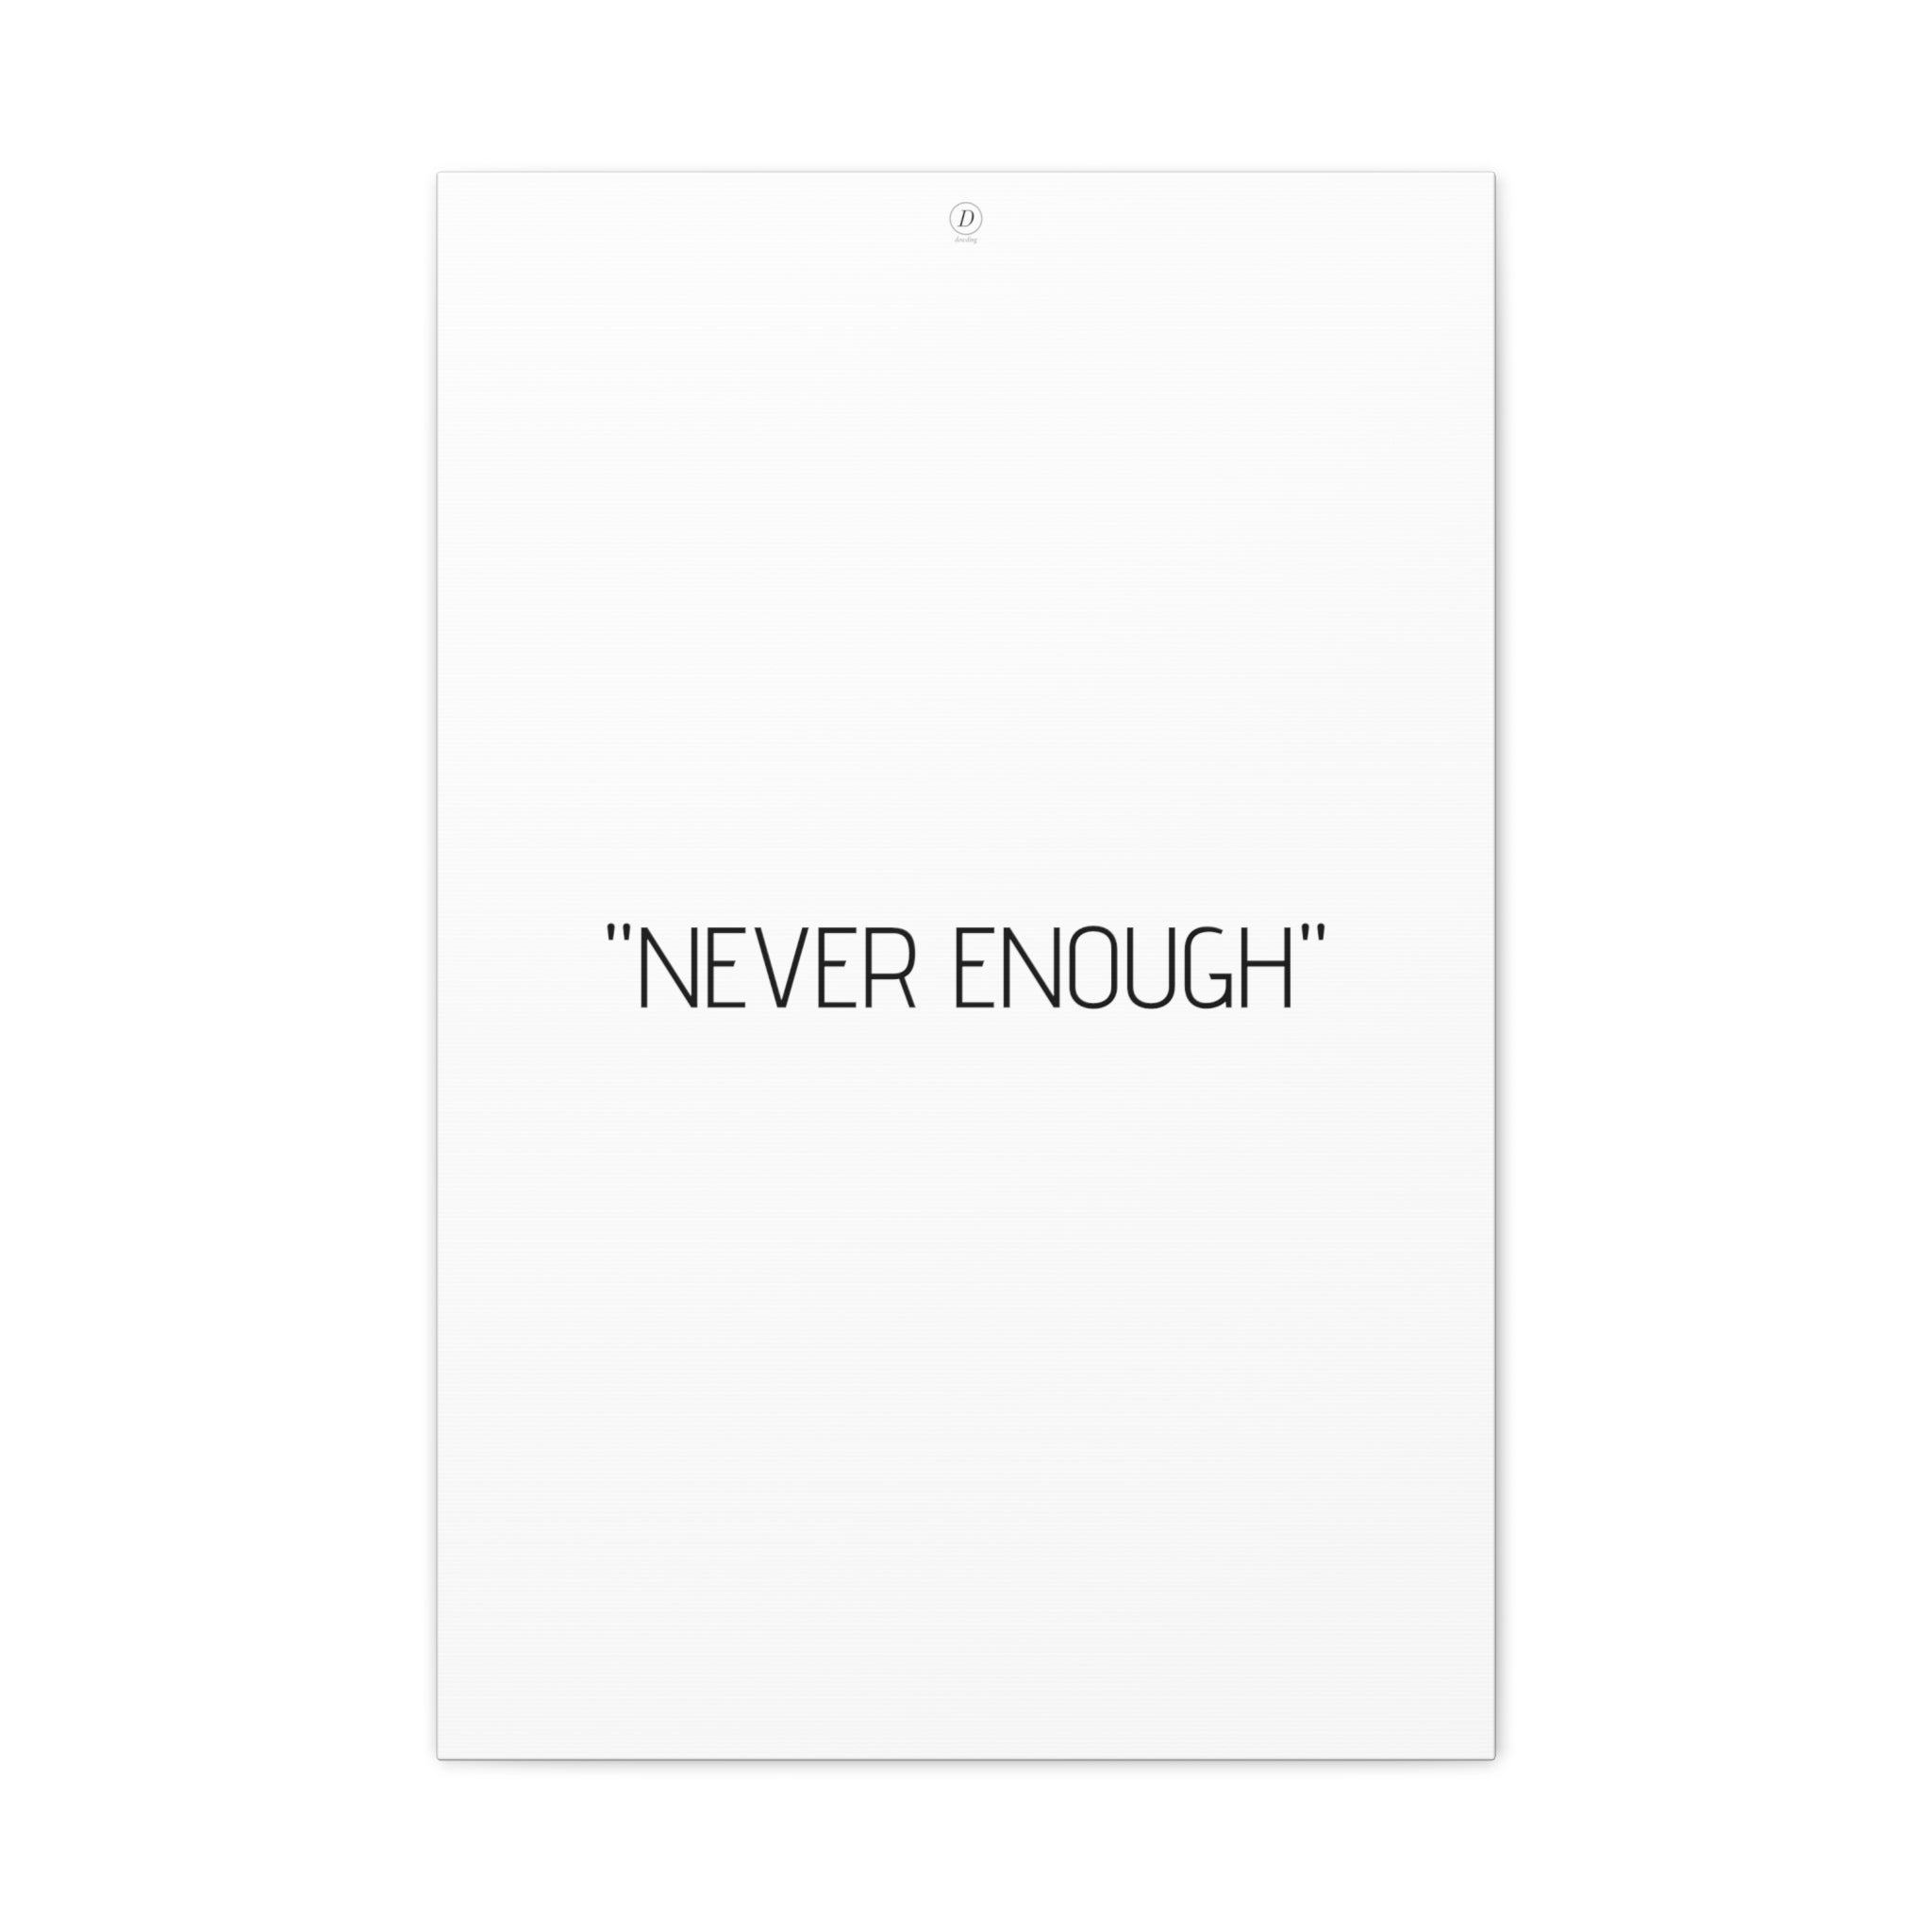 "NEVER ENOUGH" Motivational Canvas Gallery Wraps